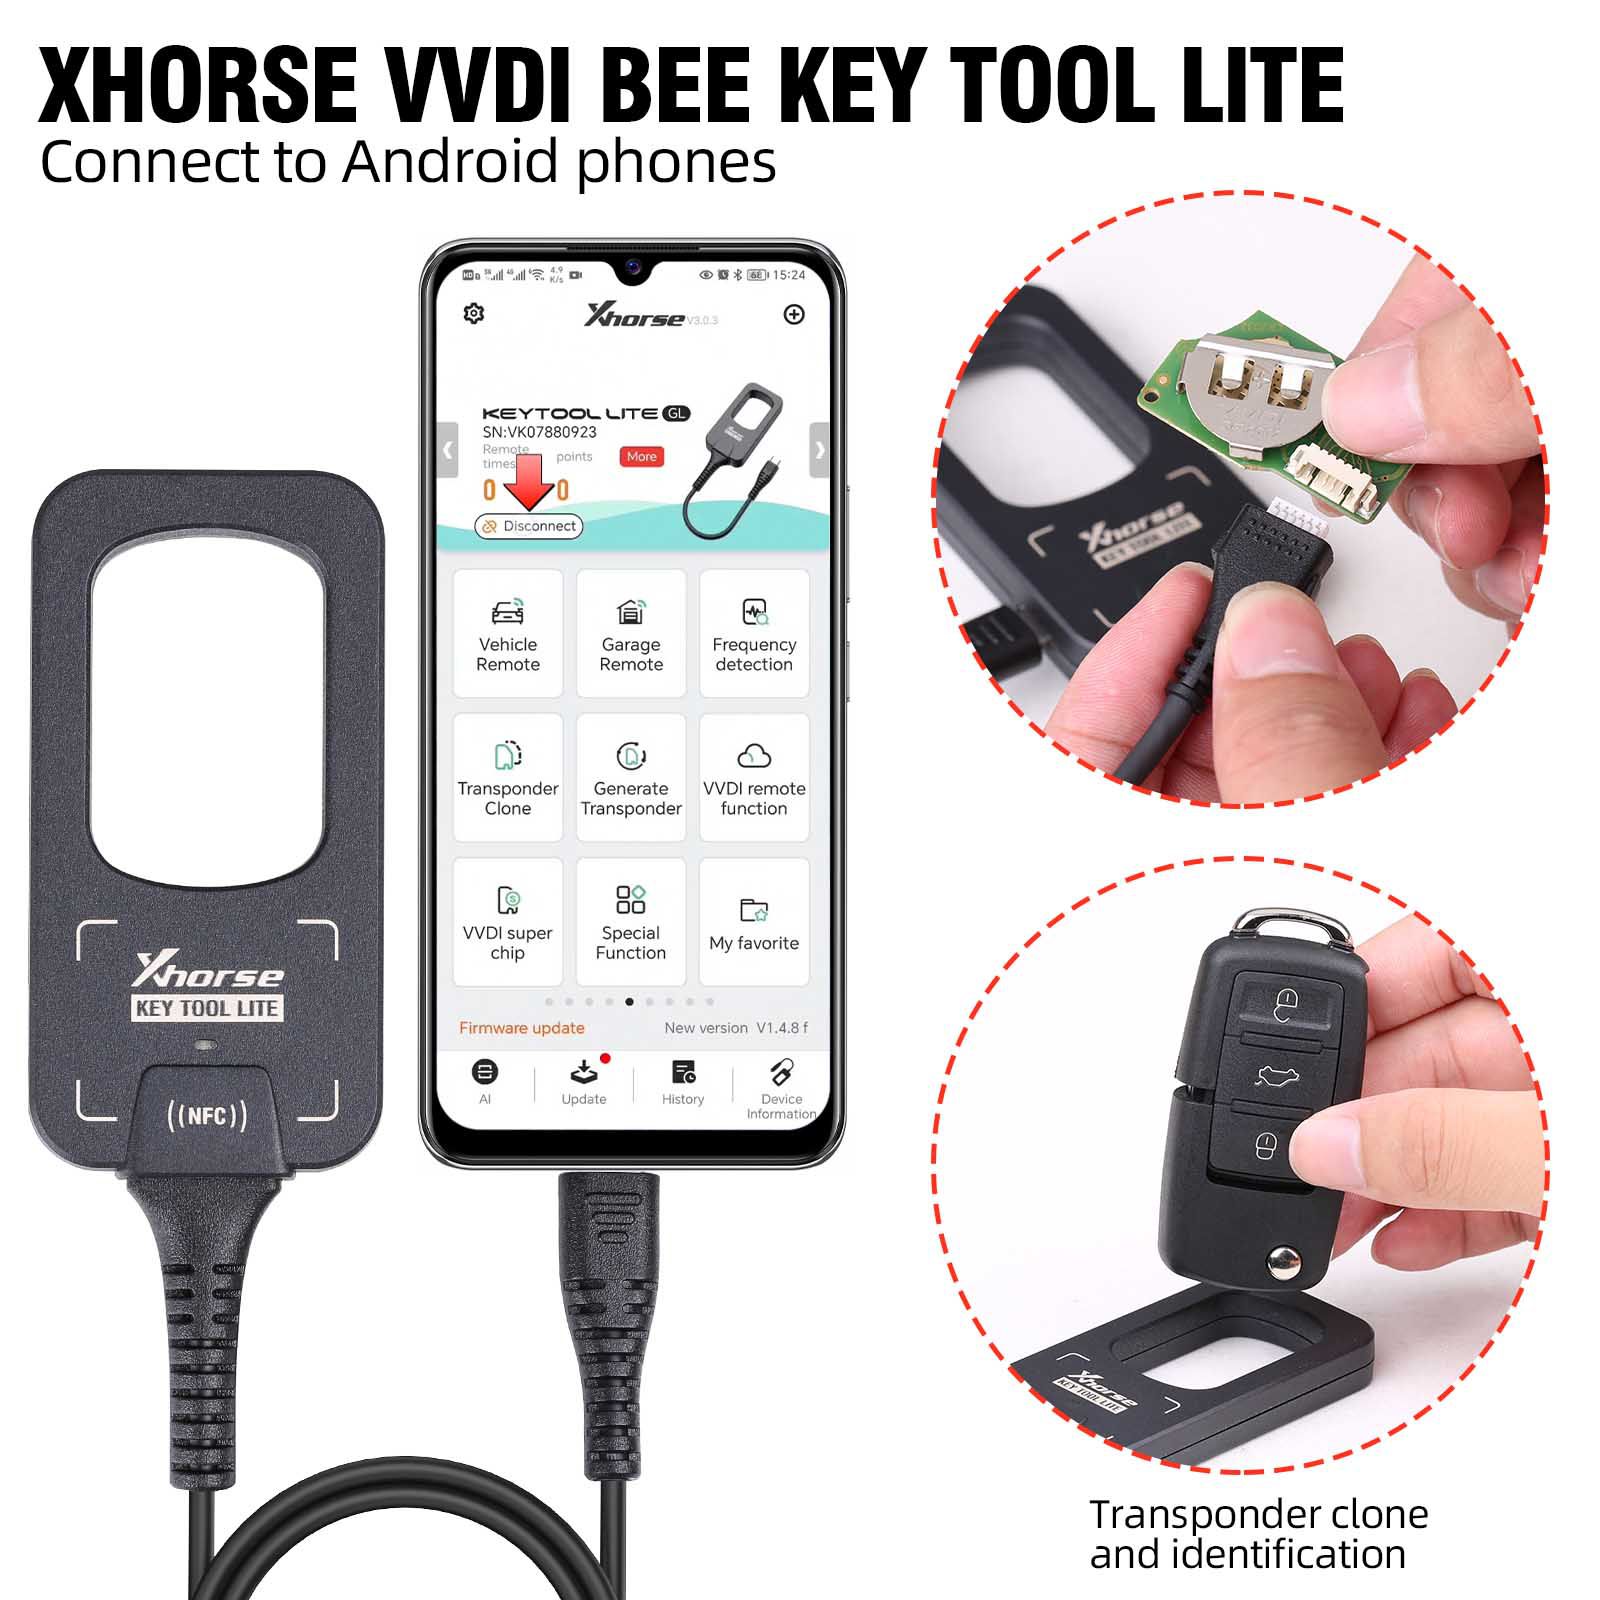 2023 xhorse vvdi Bee Key Tool Lite frecue Detection transpondedor clone android phone recibe 6 xkb501en remote control de forma gratuita